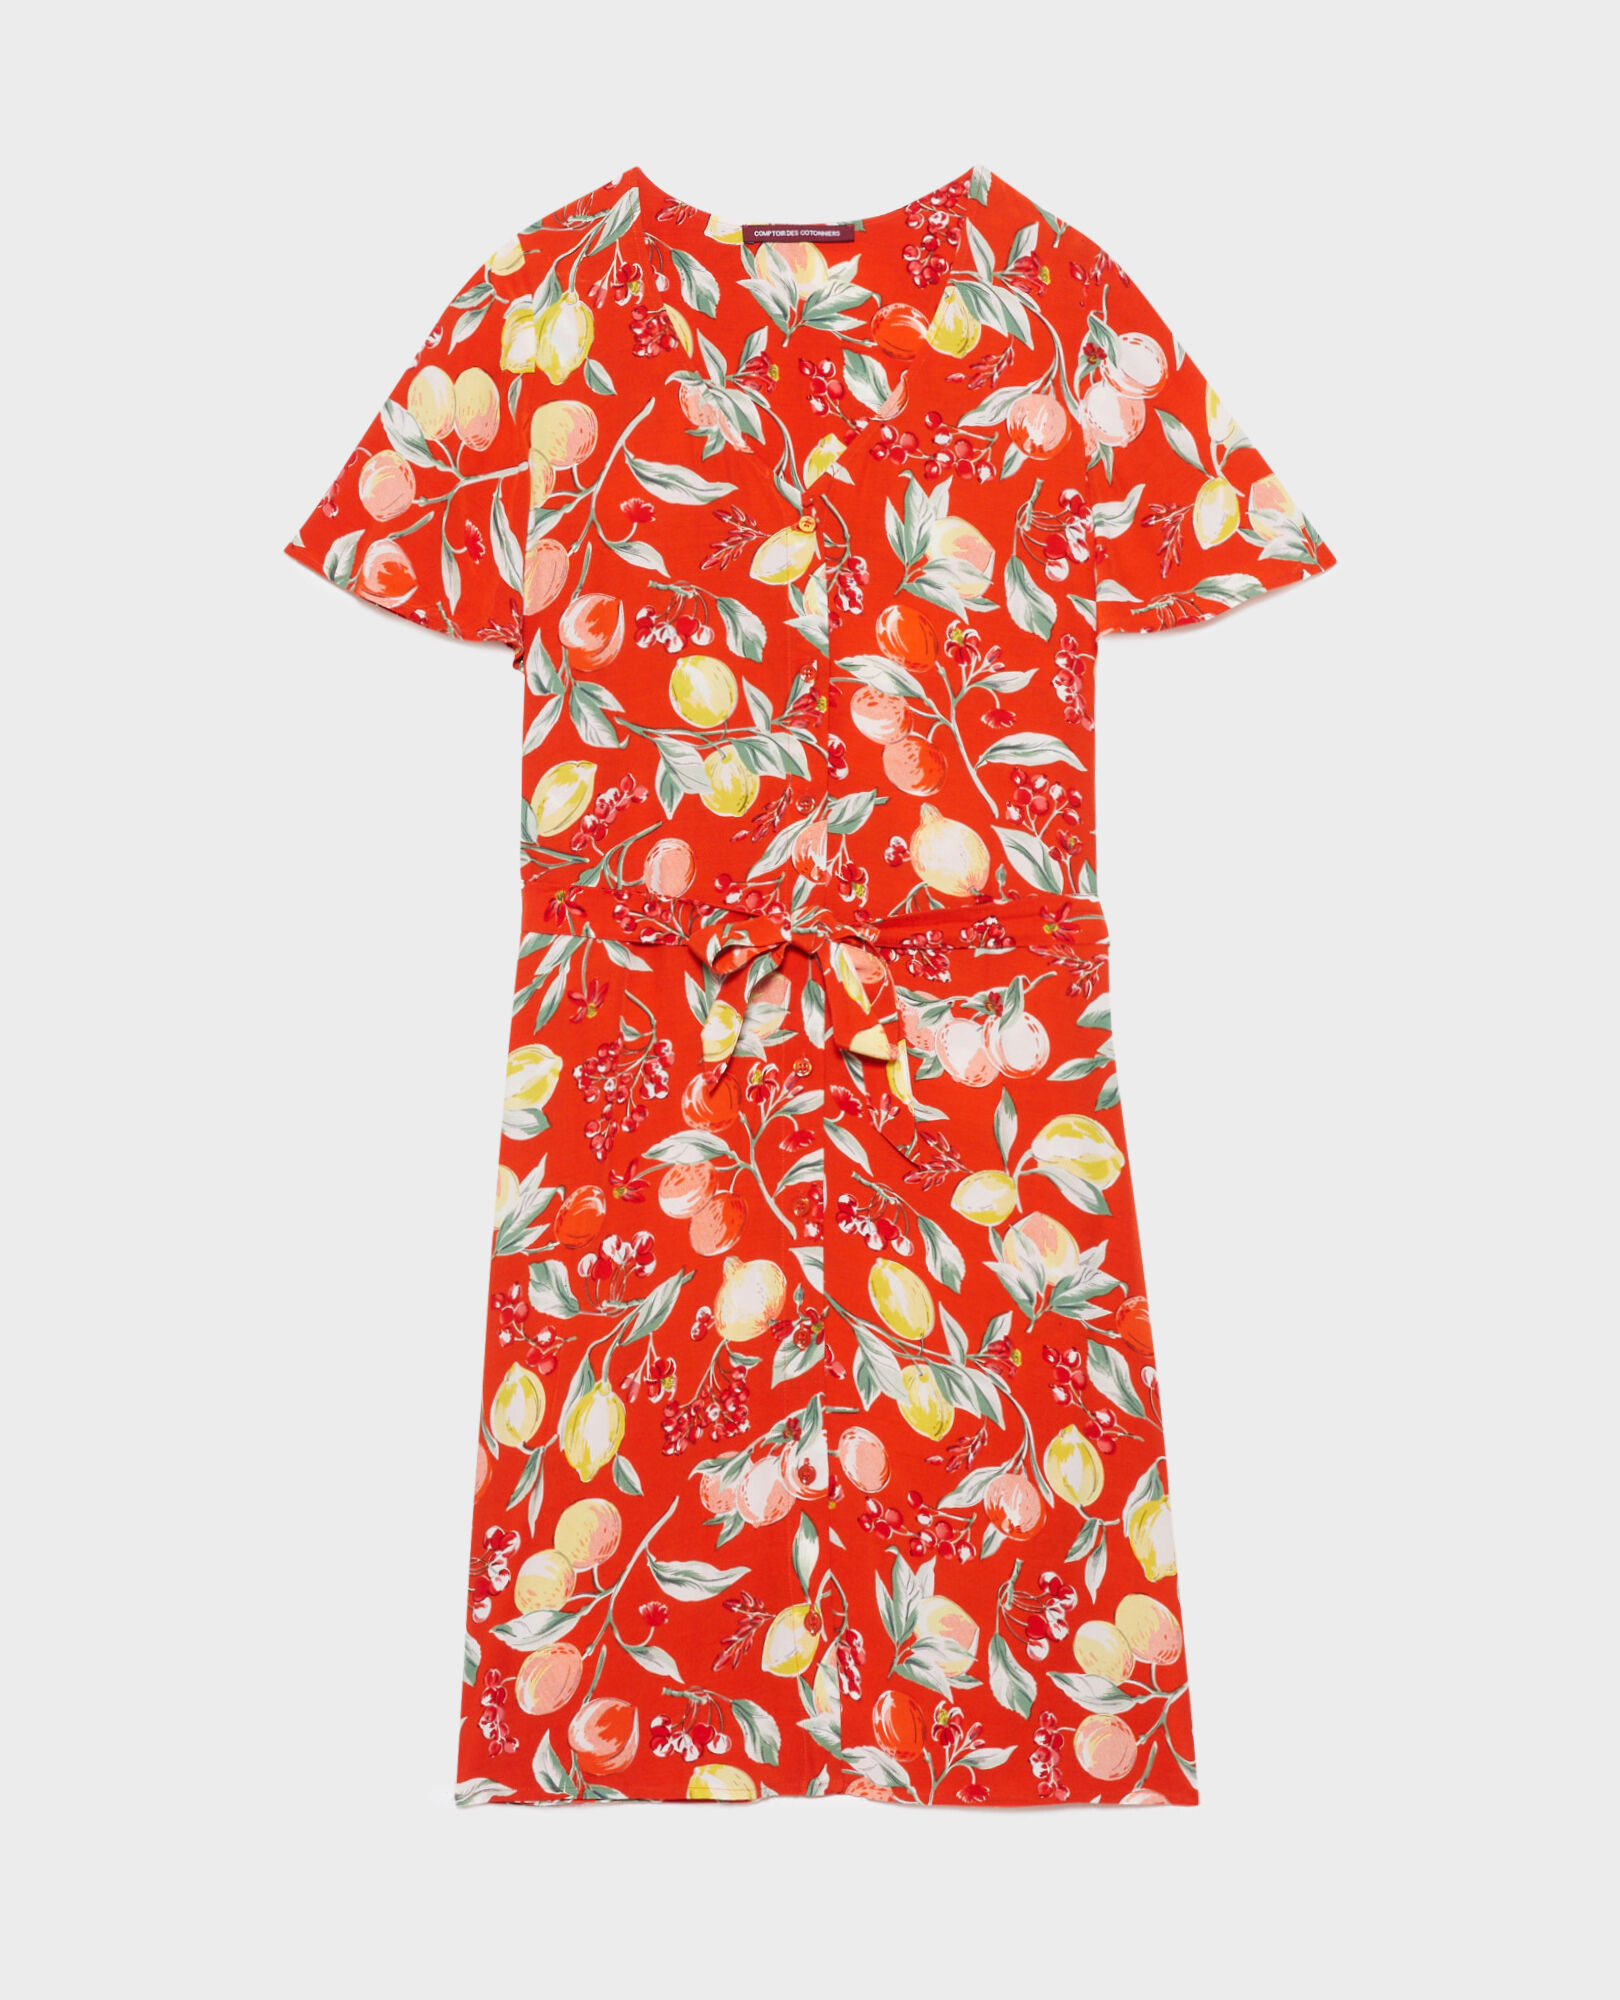 LAËTITIA - Kurzes Kleid mit fließendem Fall 103 print orange 2sdr358v02